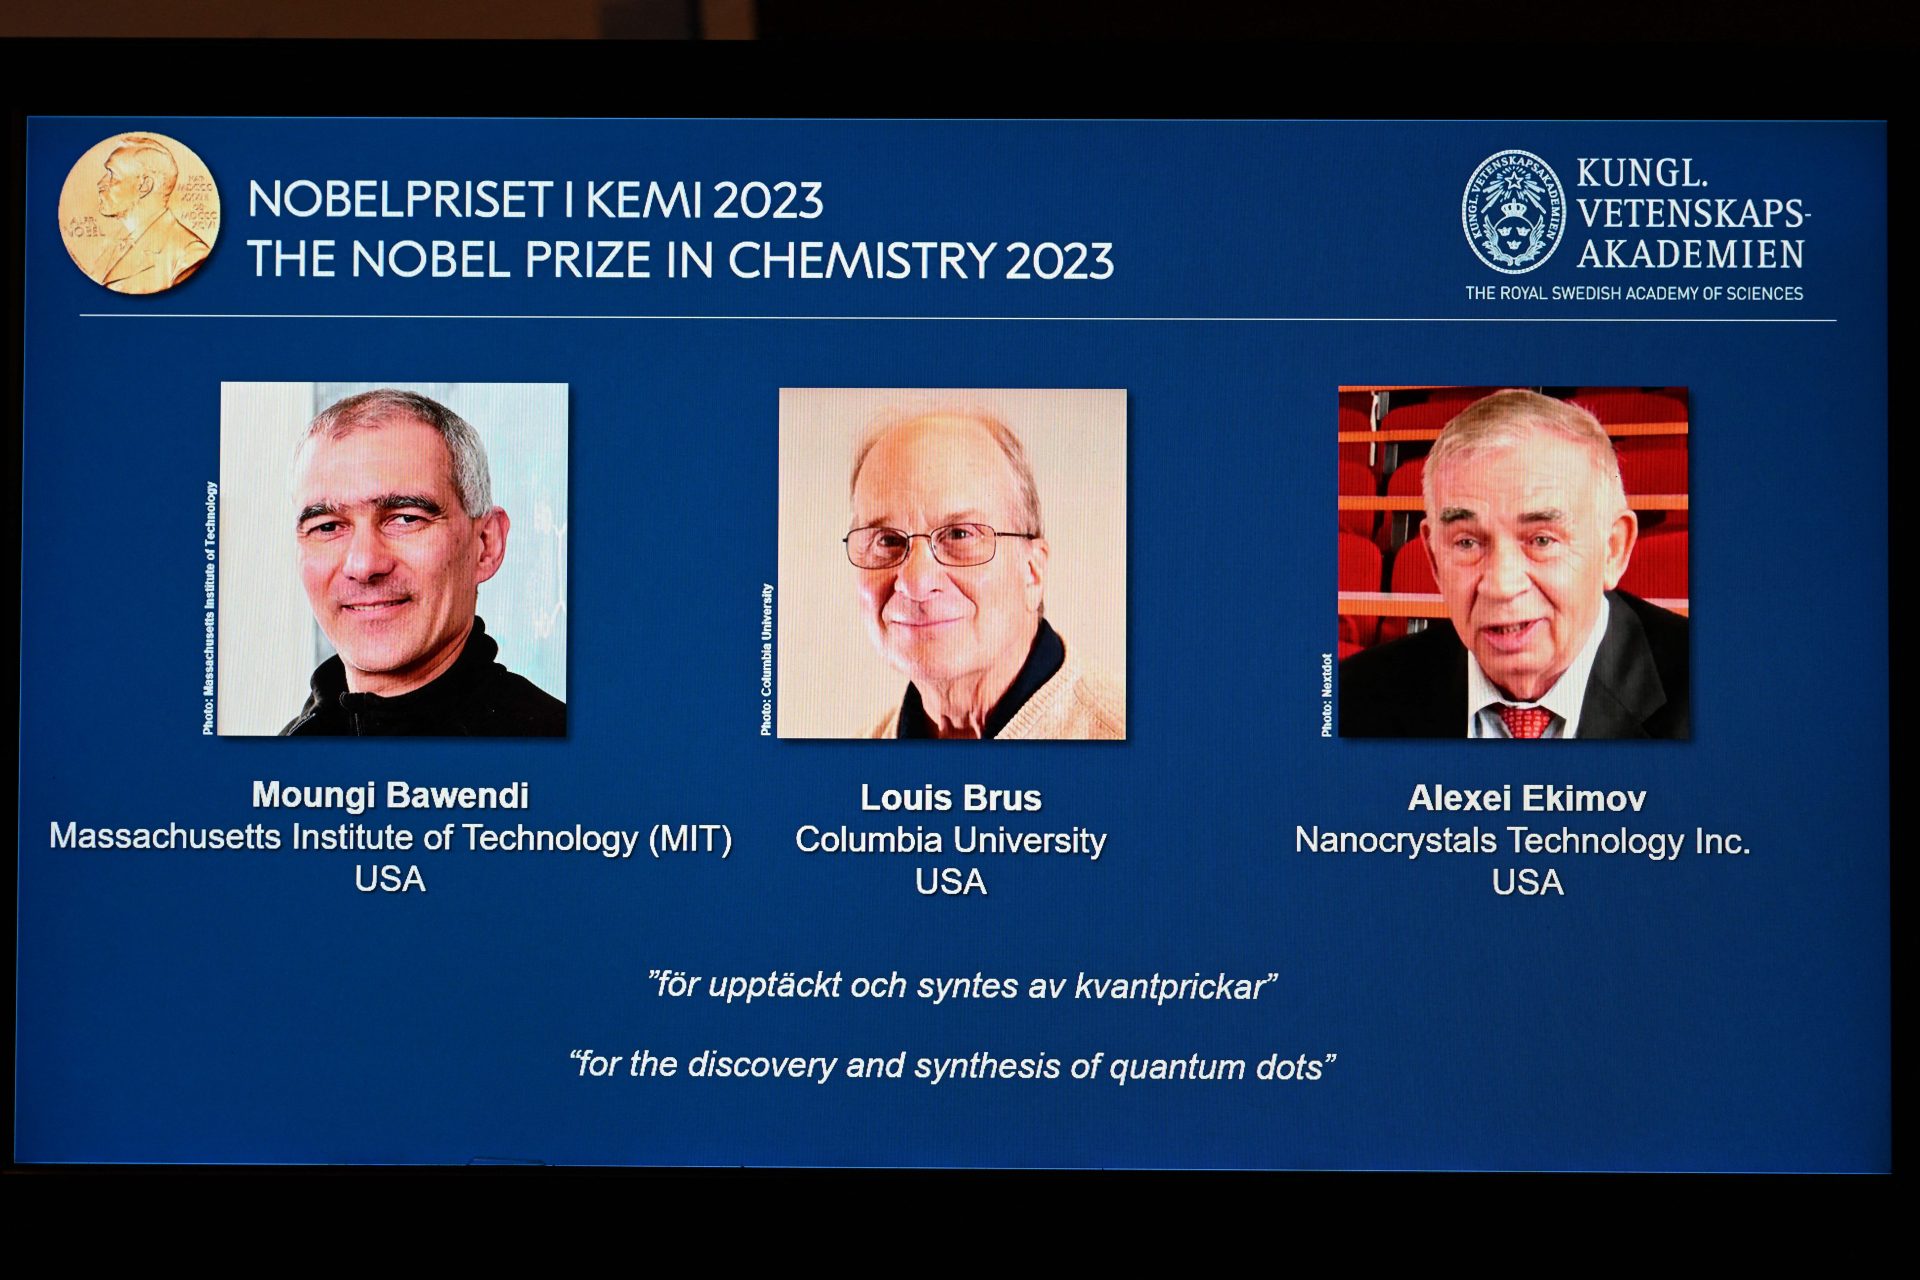 Prix Nobel de Chimie